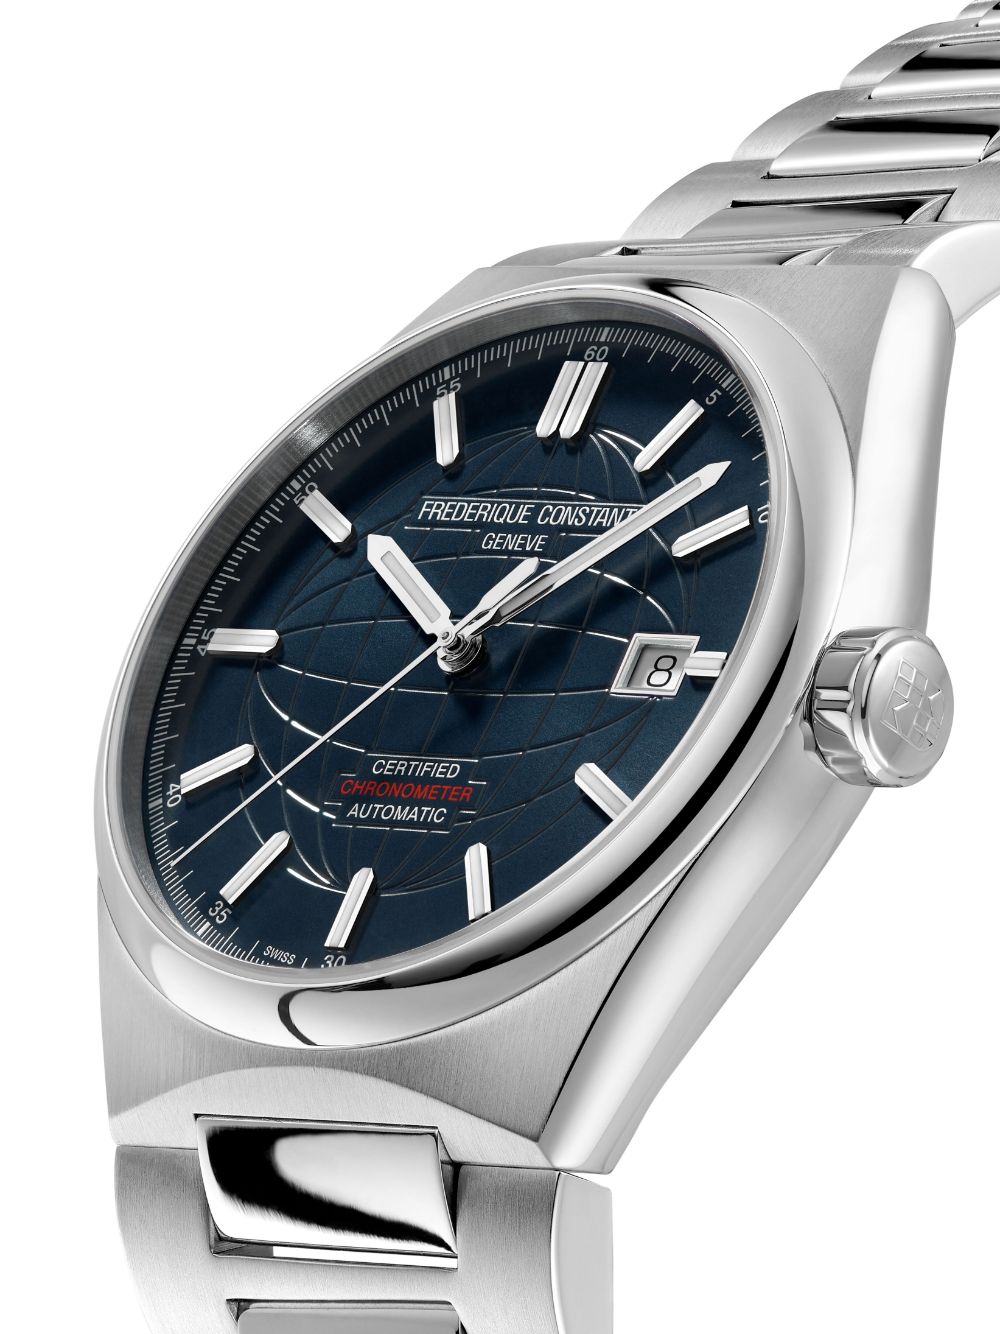 Frederique Constant Highlife Automatic COSC 39mm horloge - Blauw